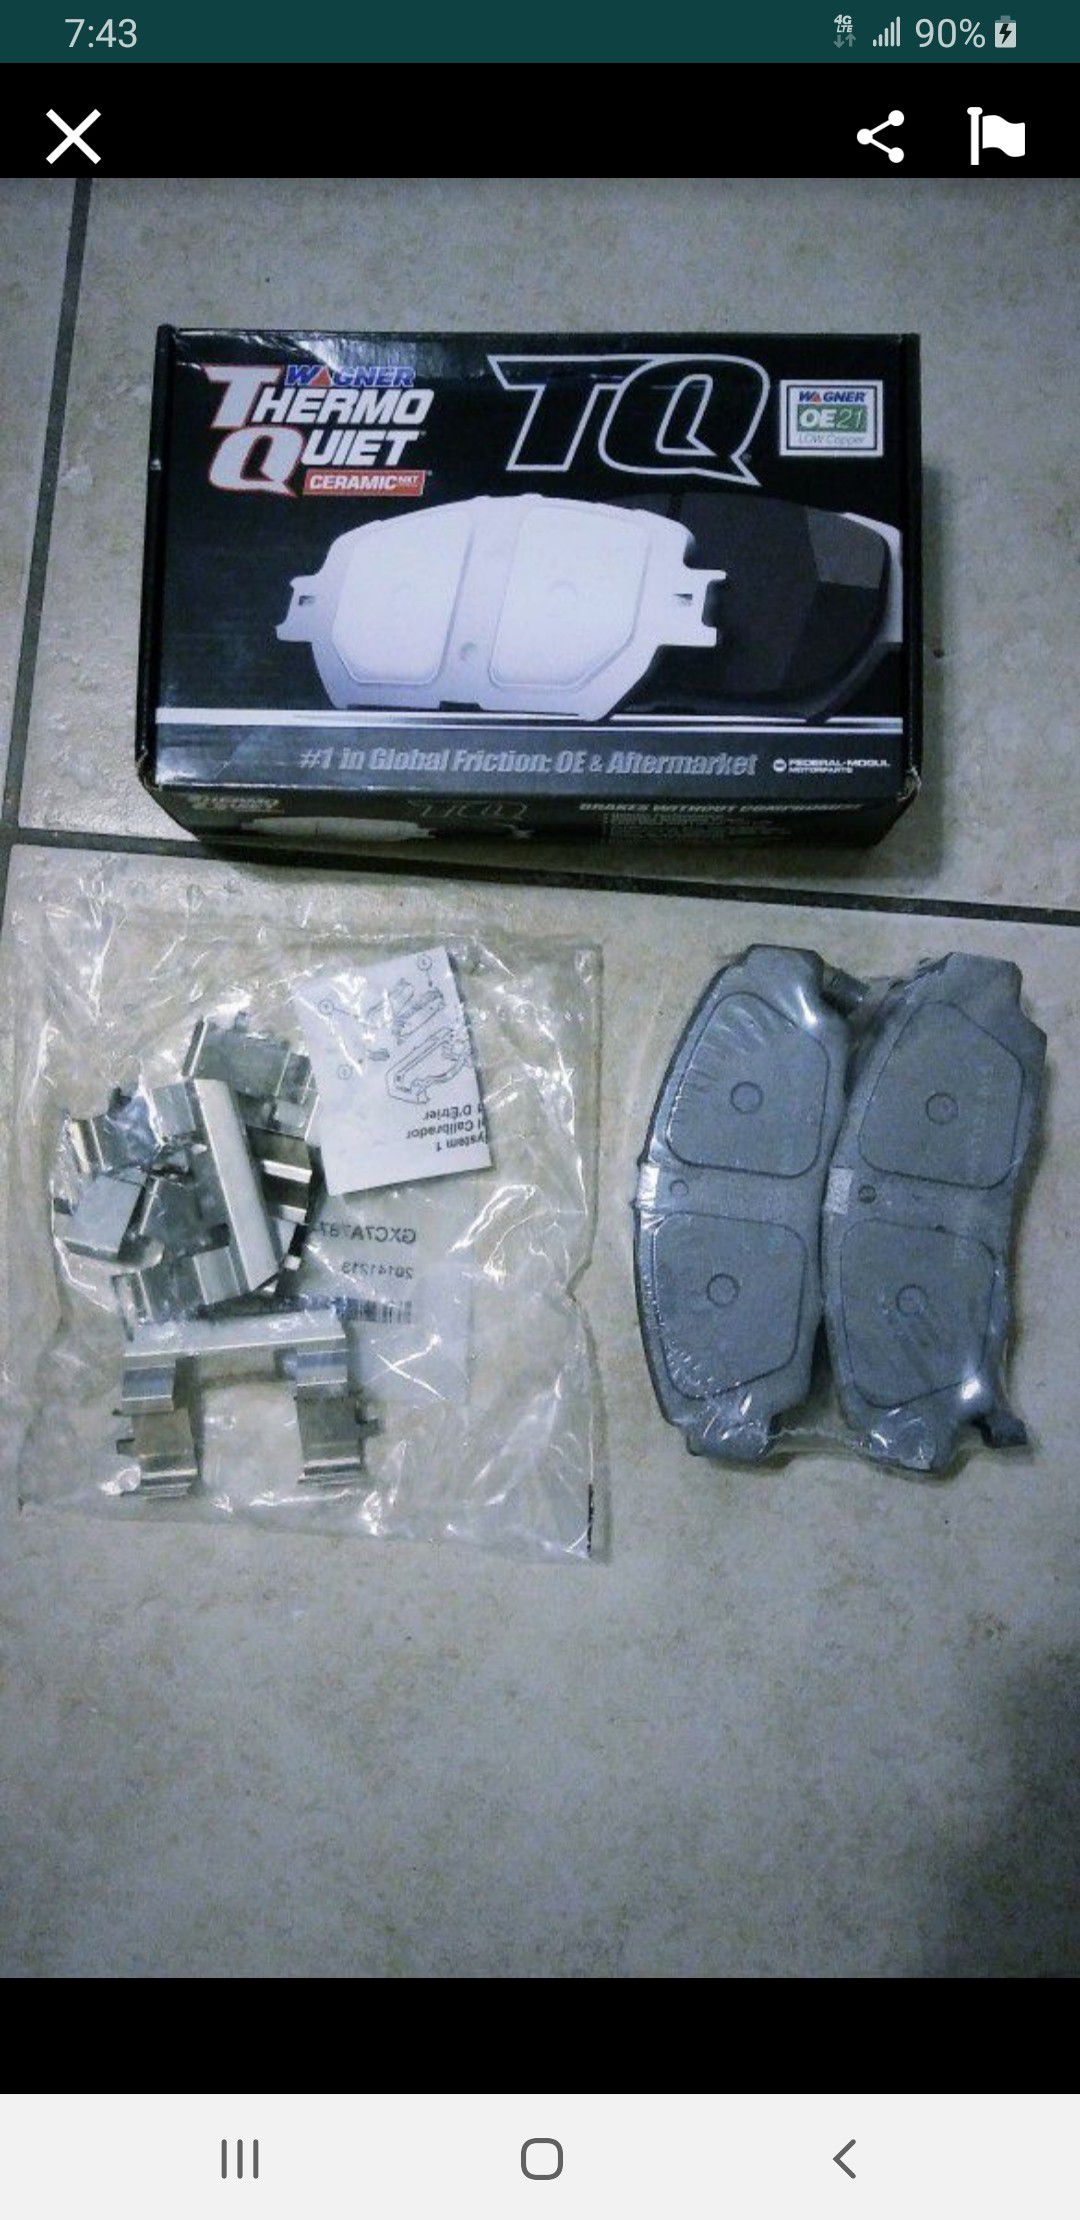 03-09 Acura-Honda brake parts